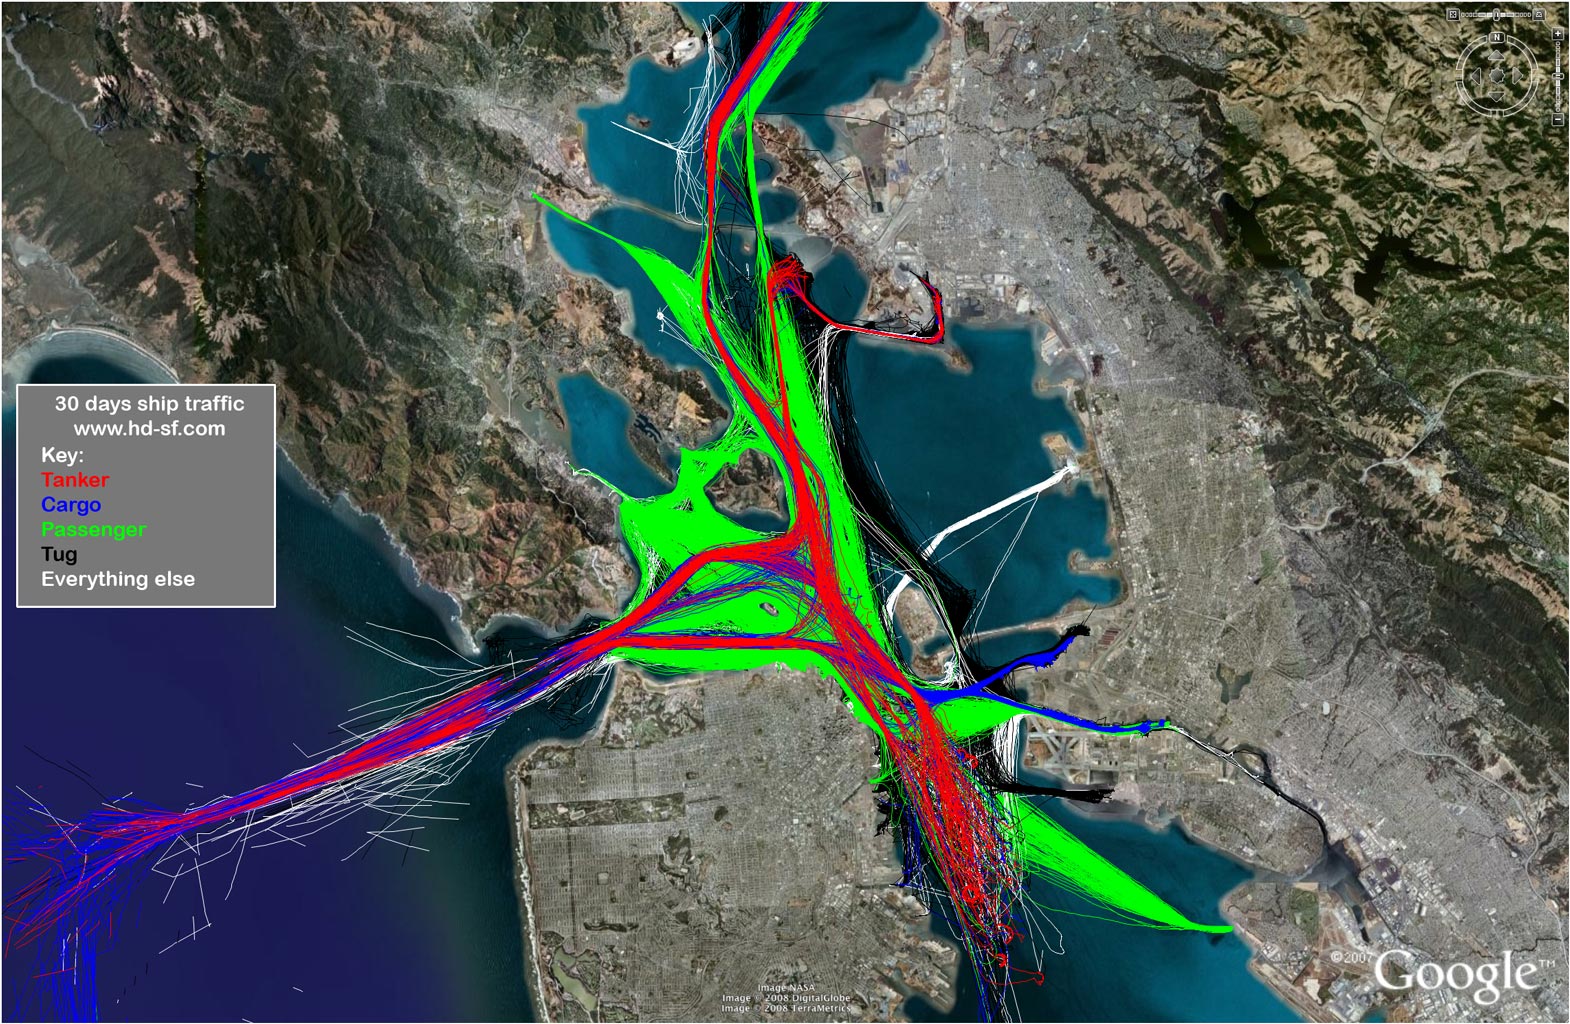 30 days ship traffic - San Francisco Bay